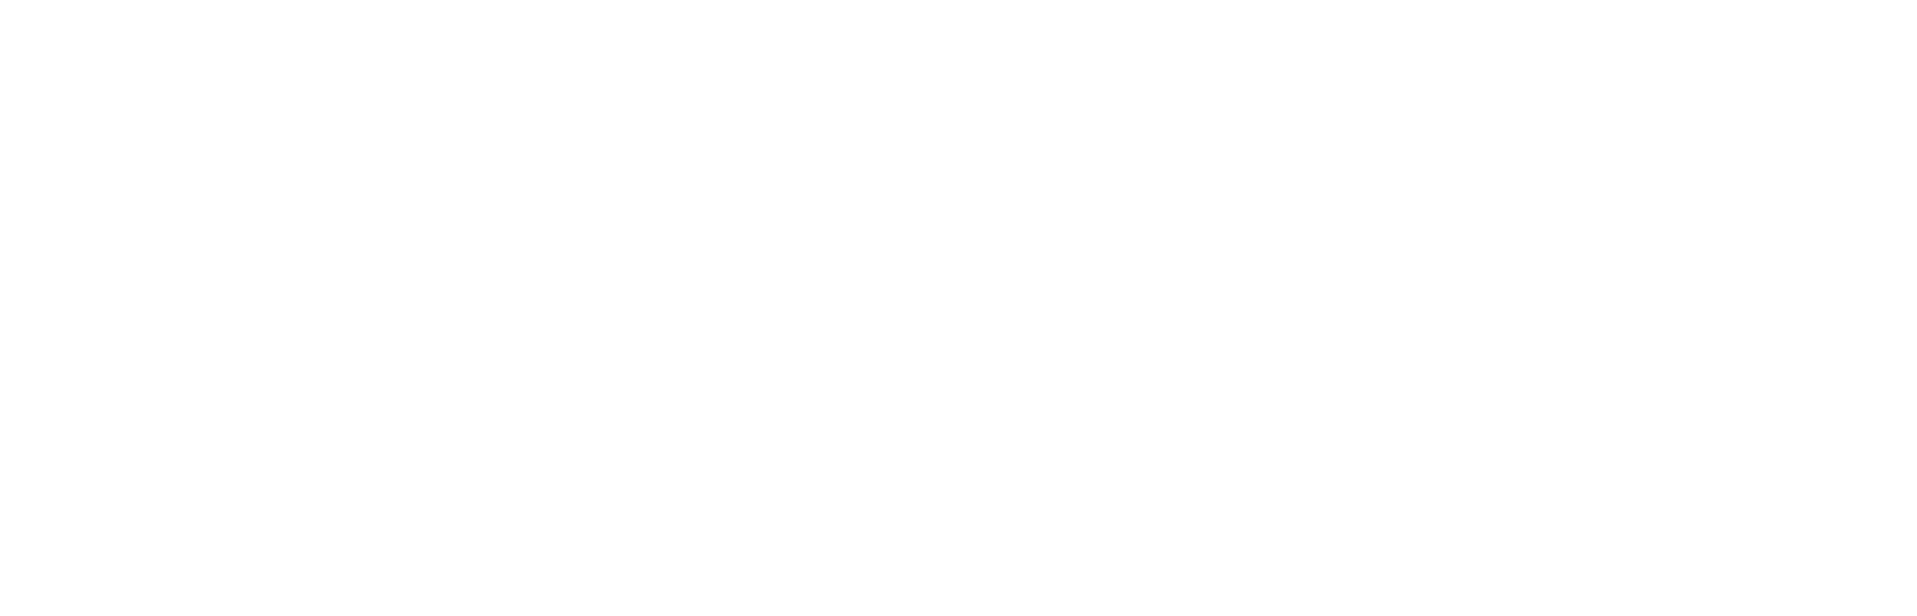 George Geambasu